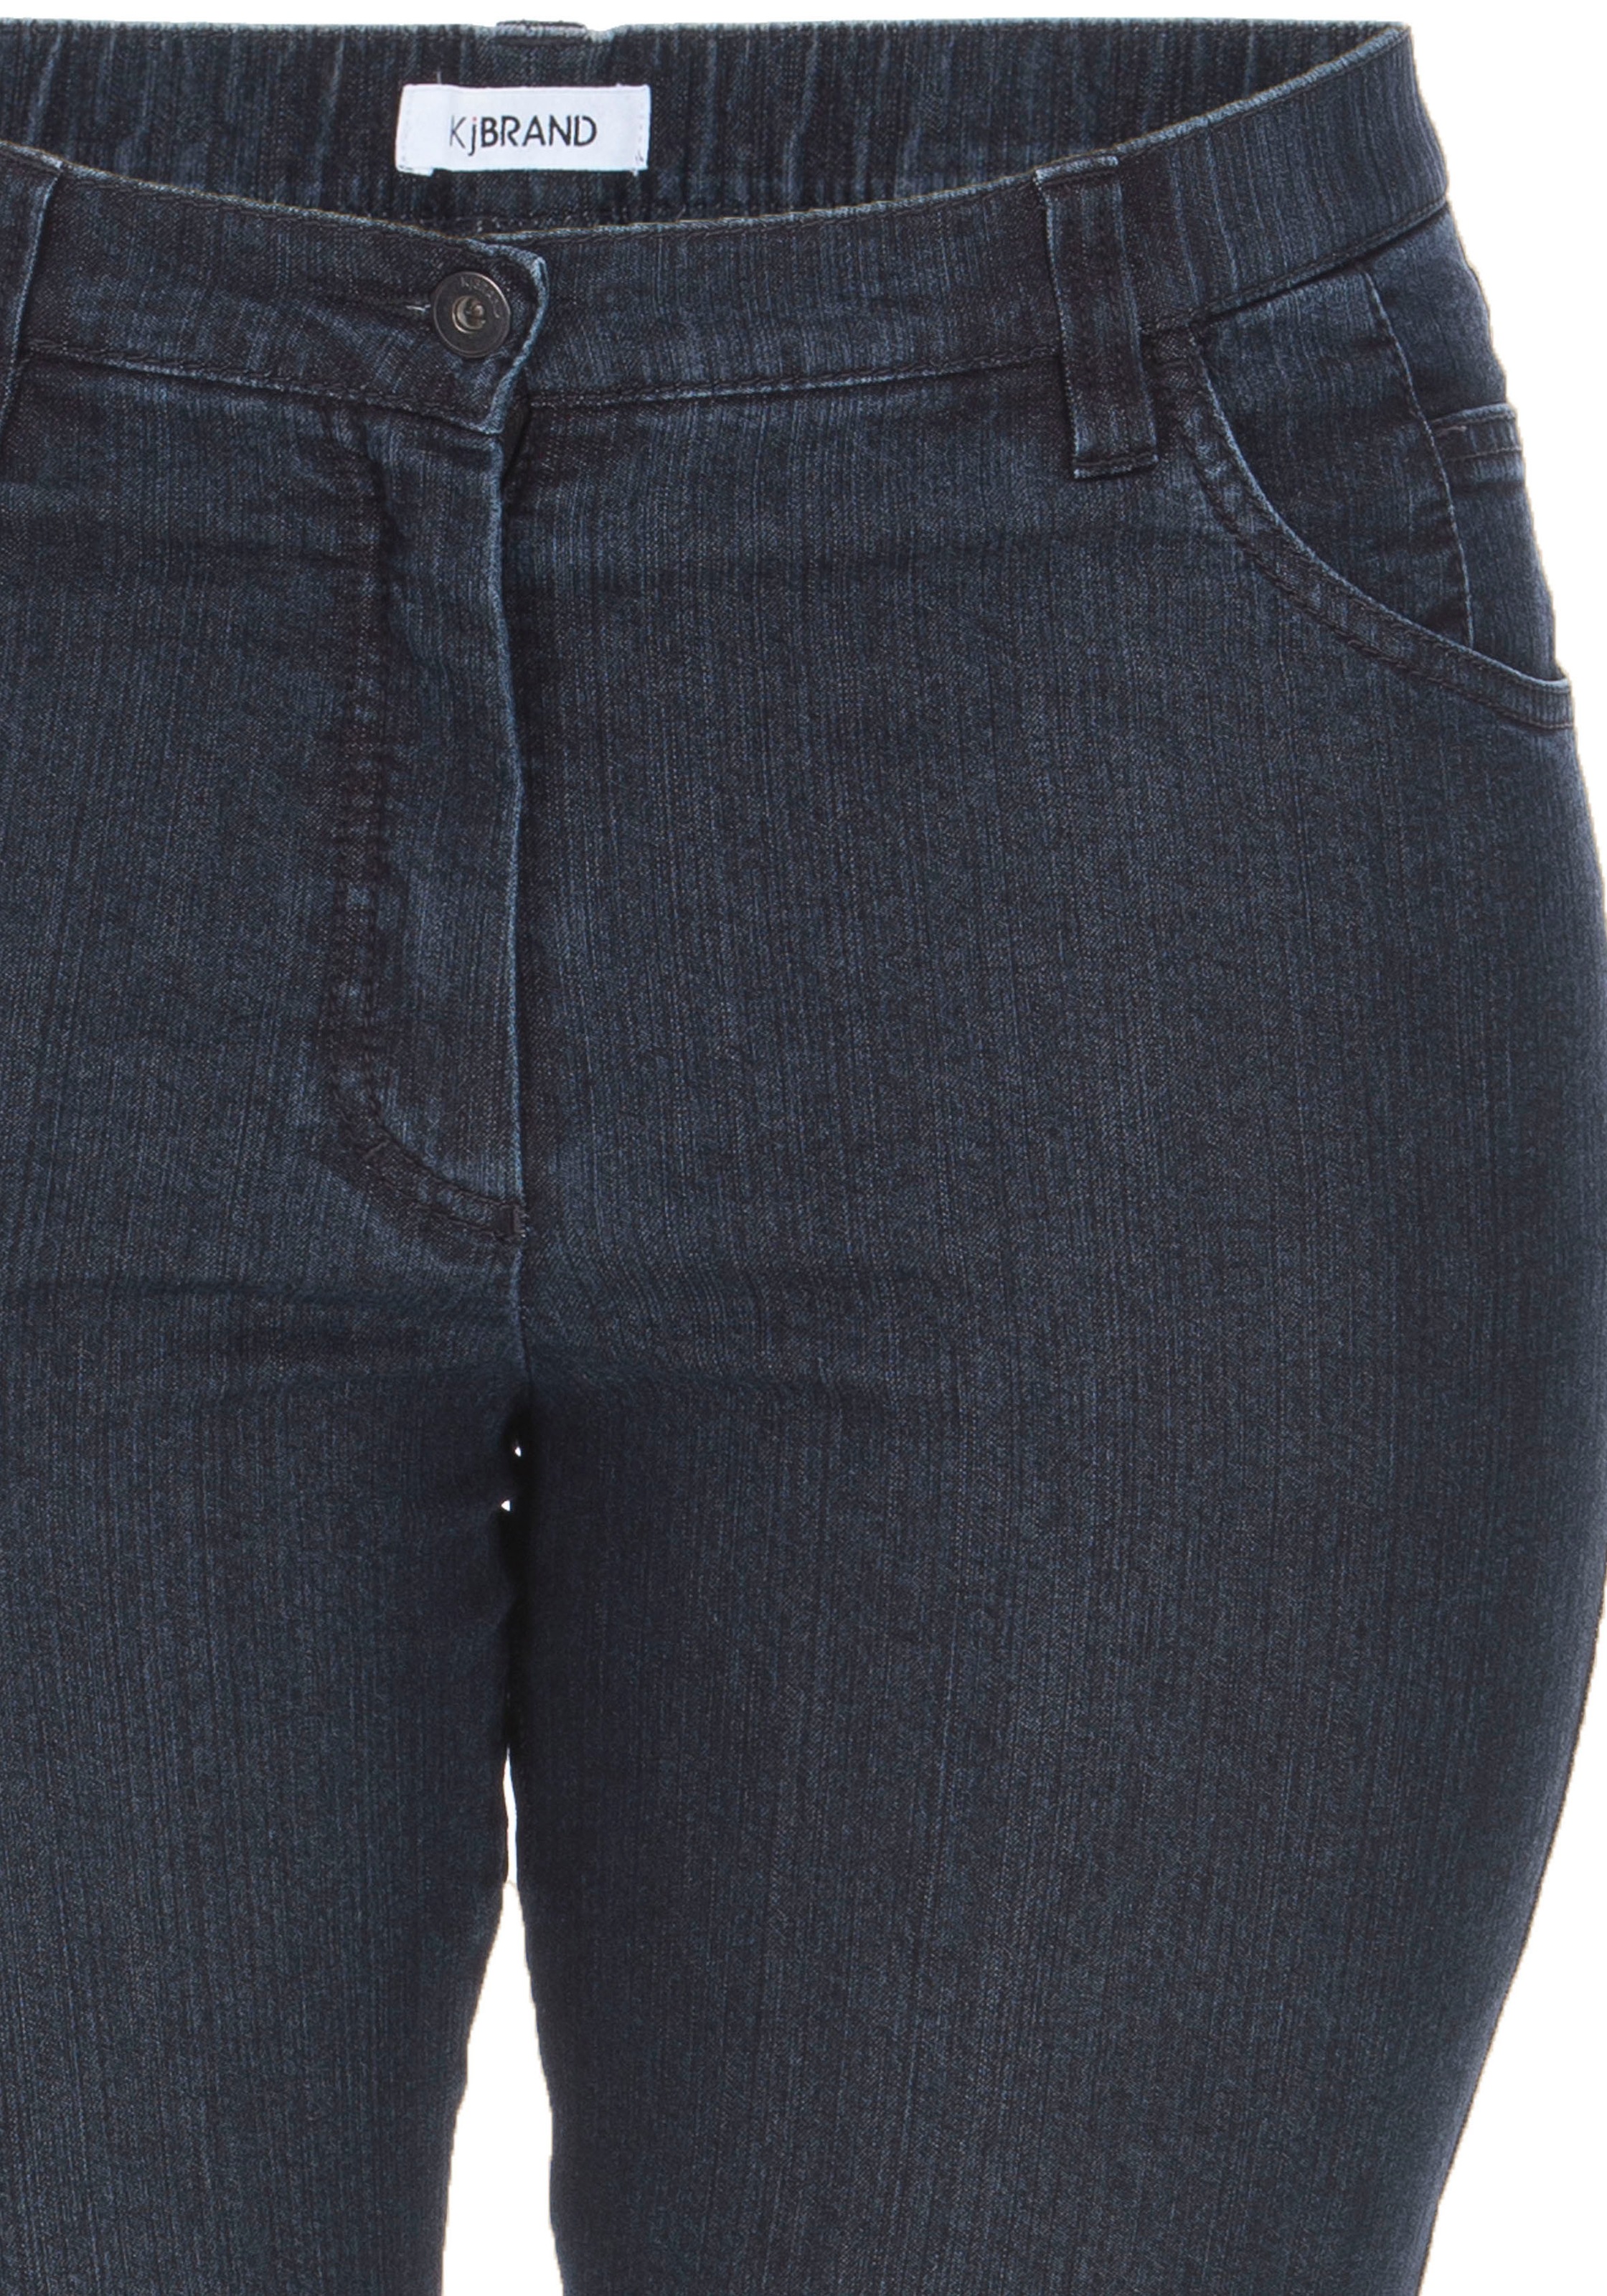 kaufen KjBRAND Stretch-Jeans | für »Betty Denim BAUR CS Stretch mit Stretch«,